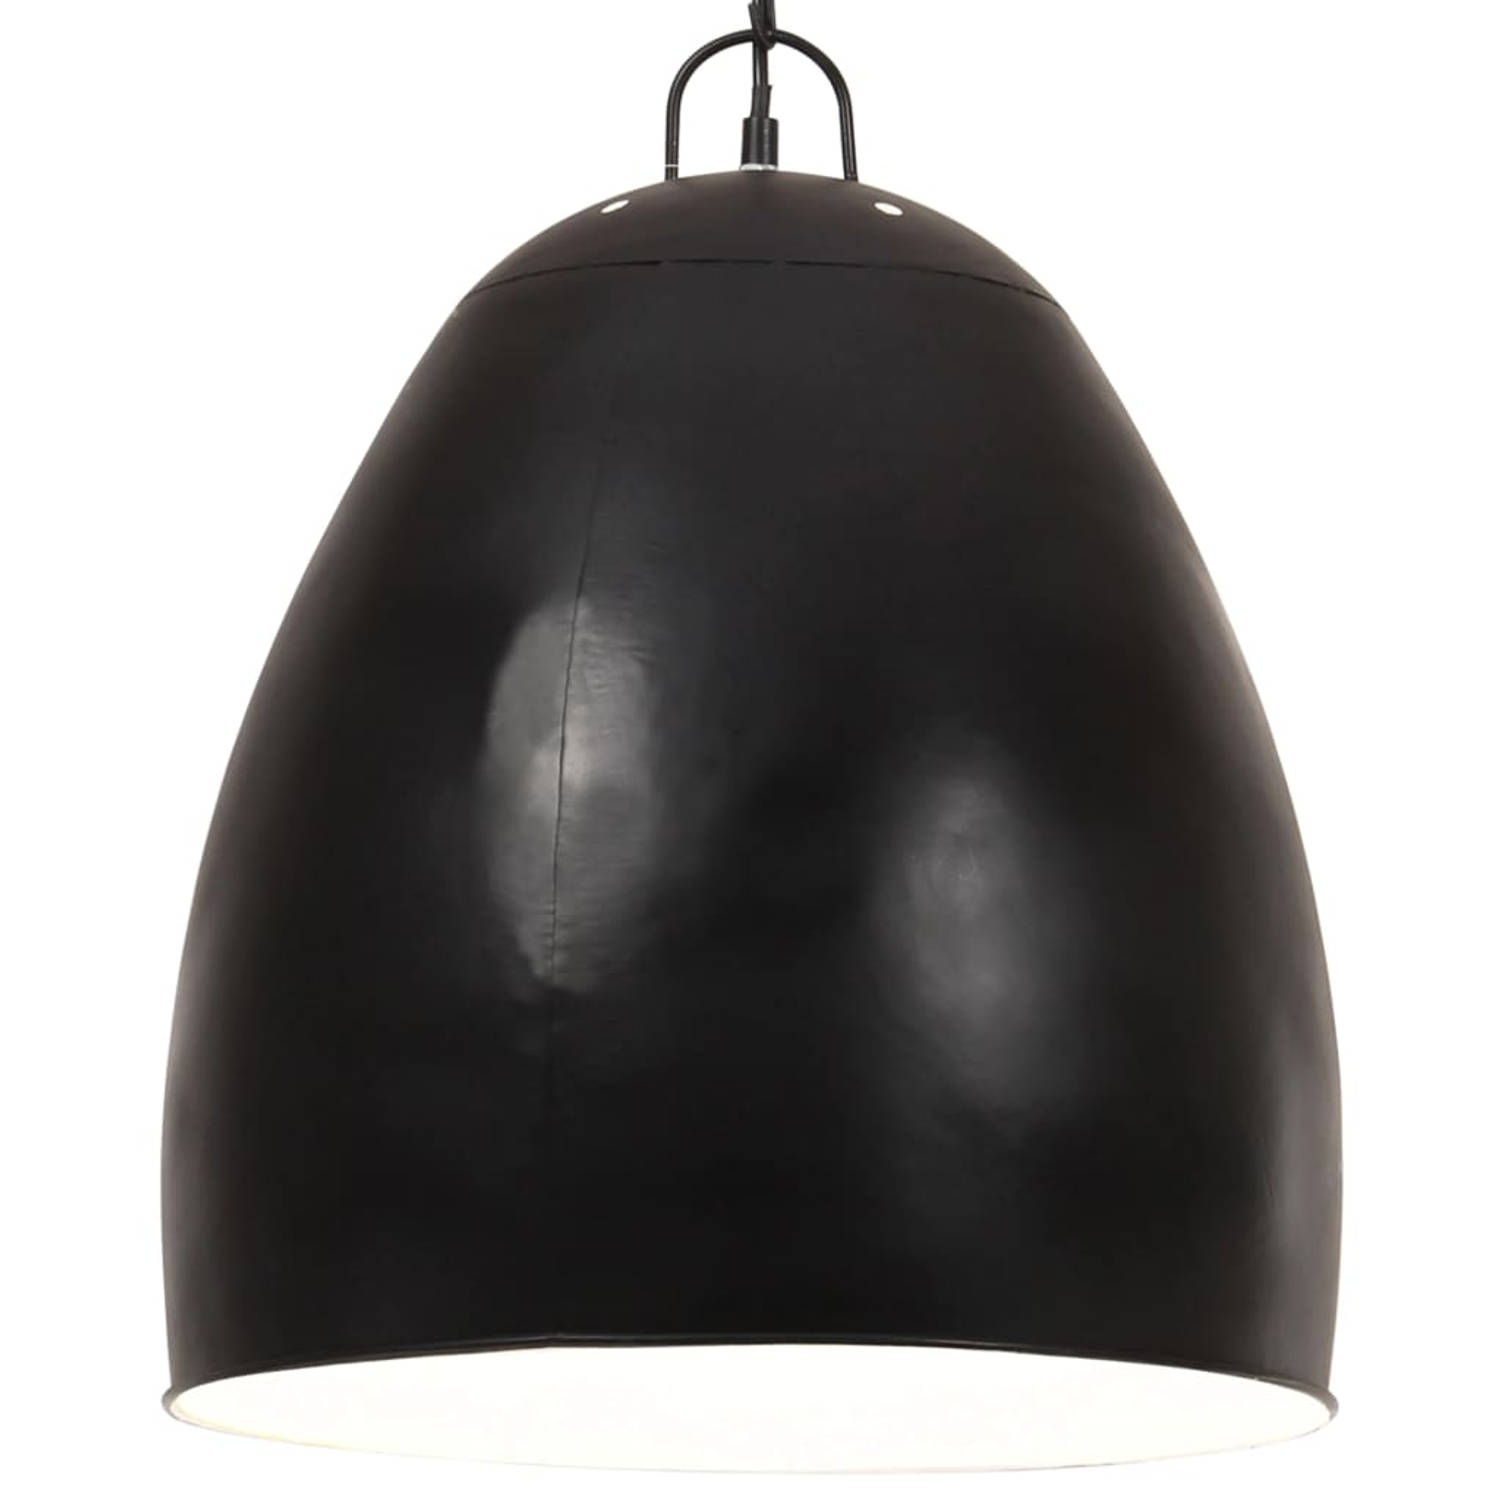 The Living Store Hanglamp - Zwart ijzer met coating - 42 x 52 cm (ø x H) - E27 fitting - Max 25W